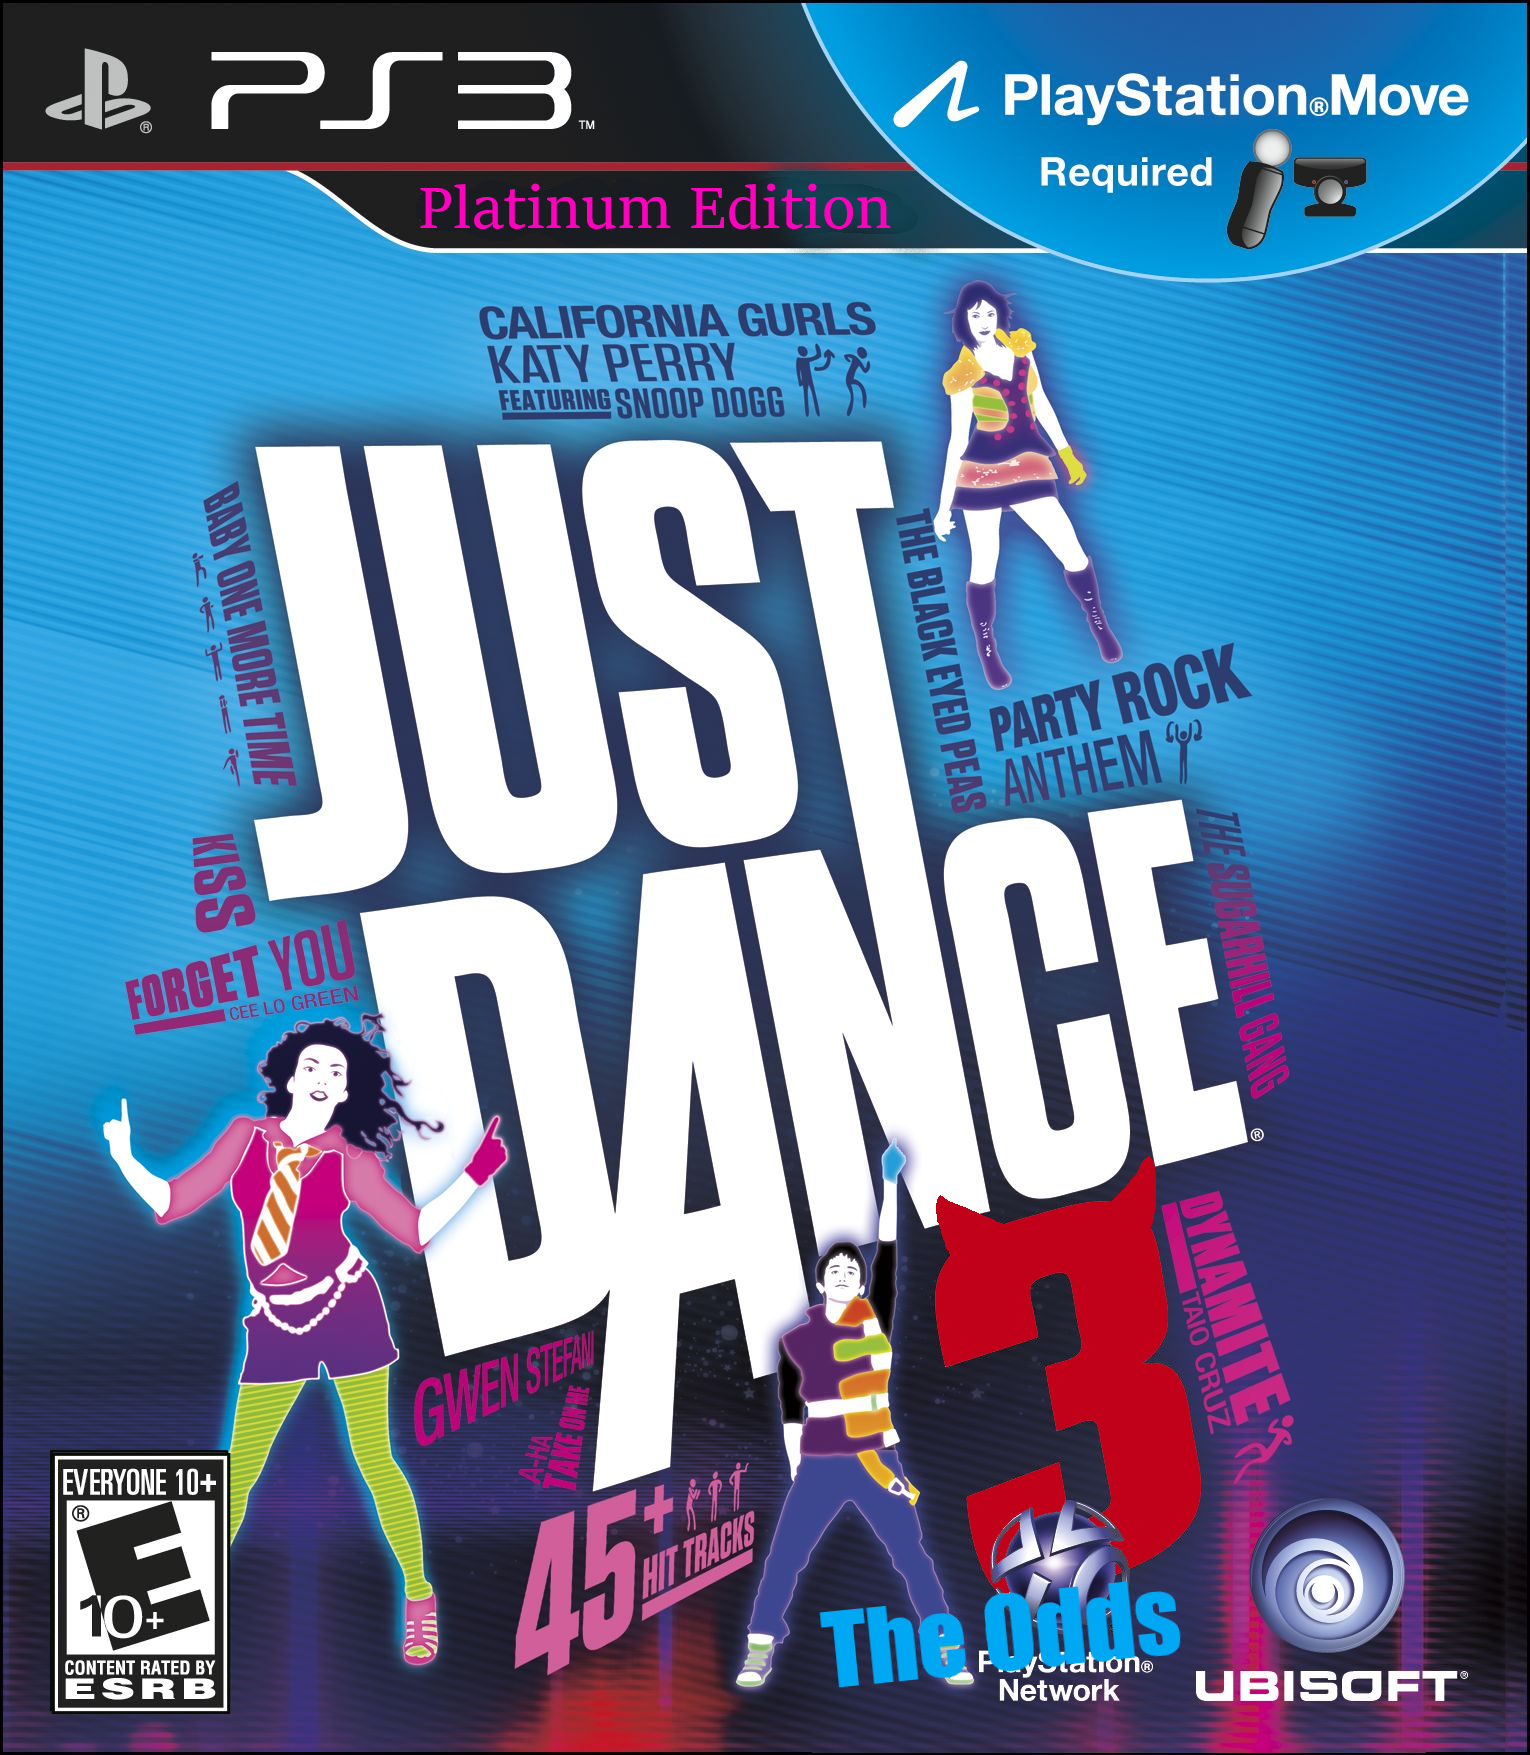 Just dance 3 dlc wad download